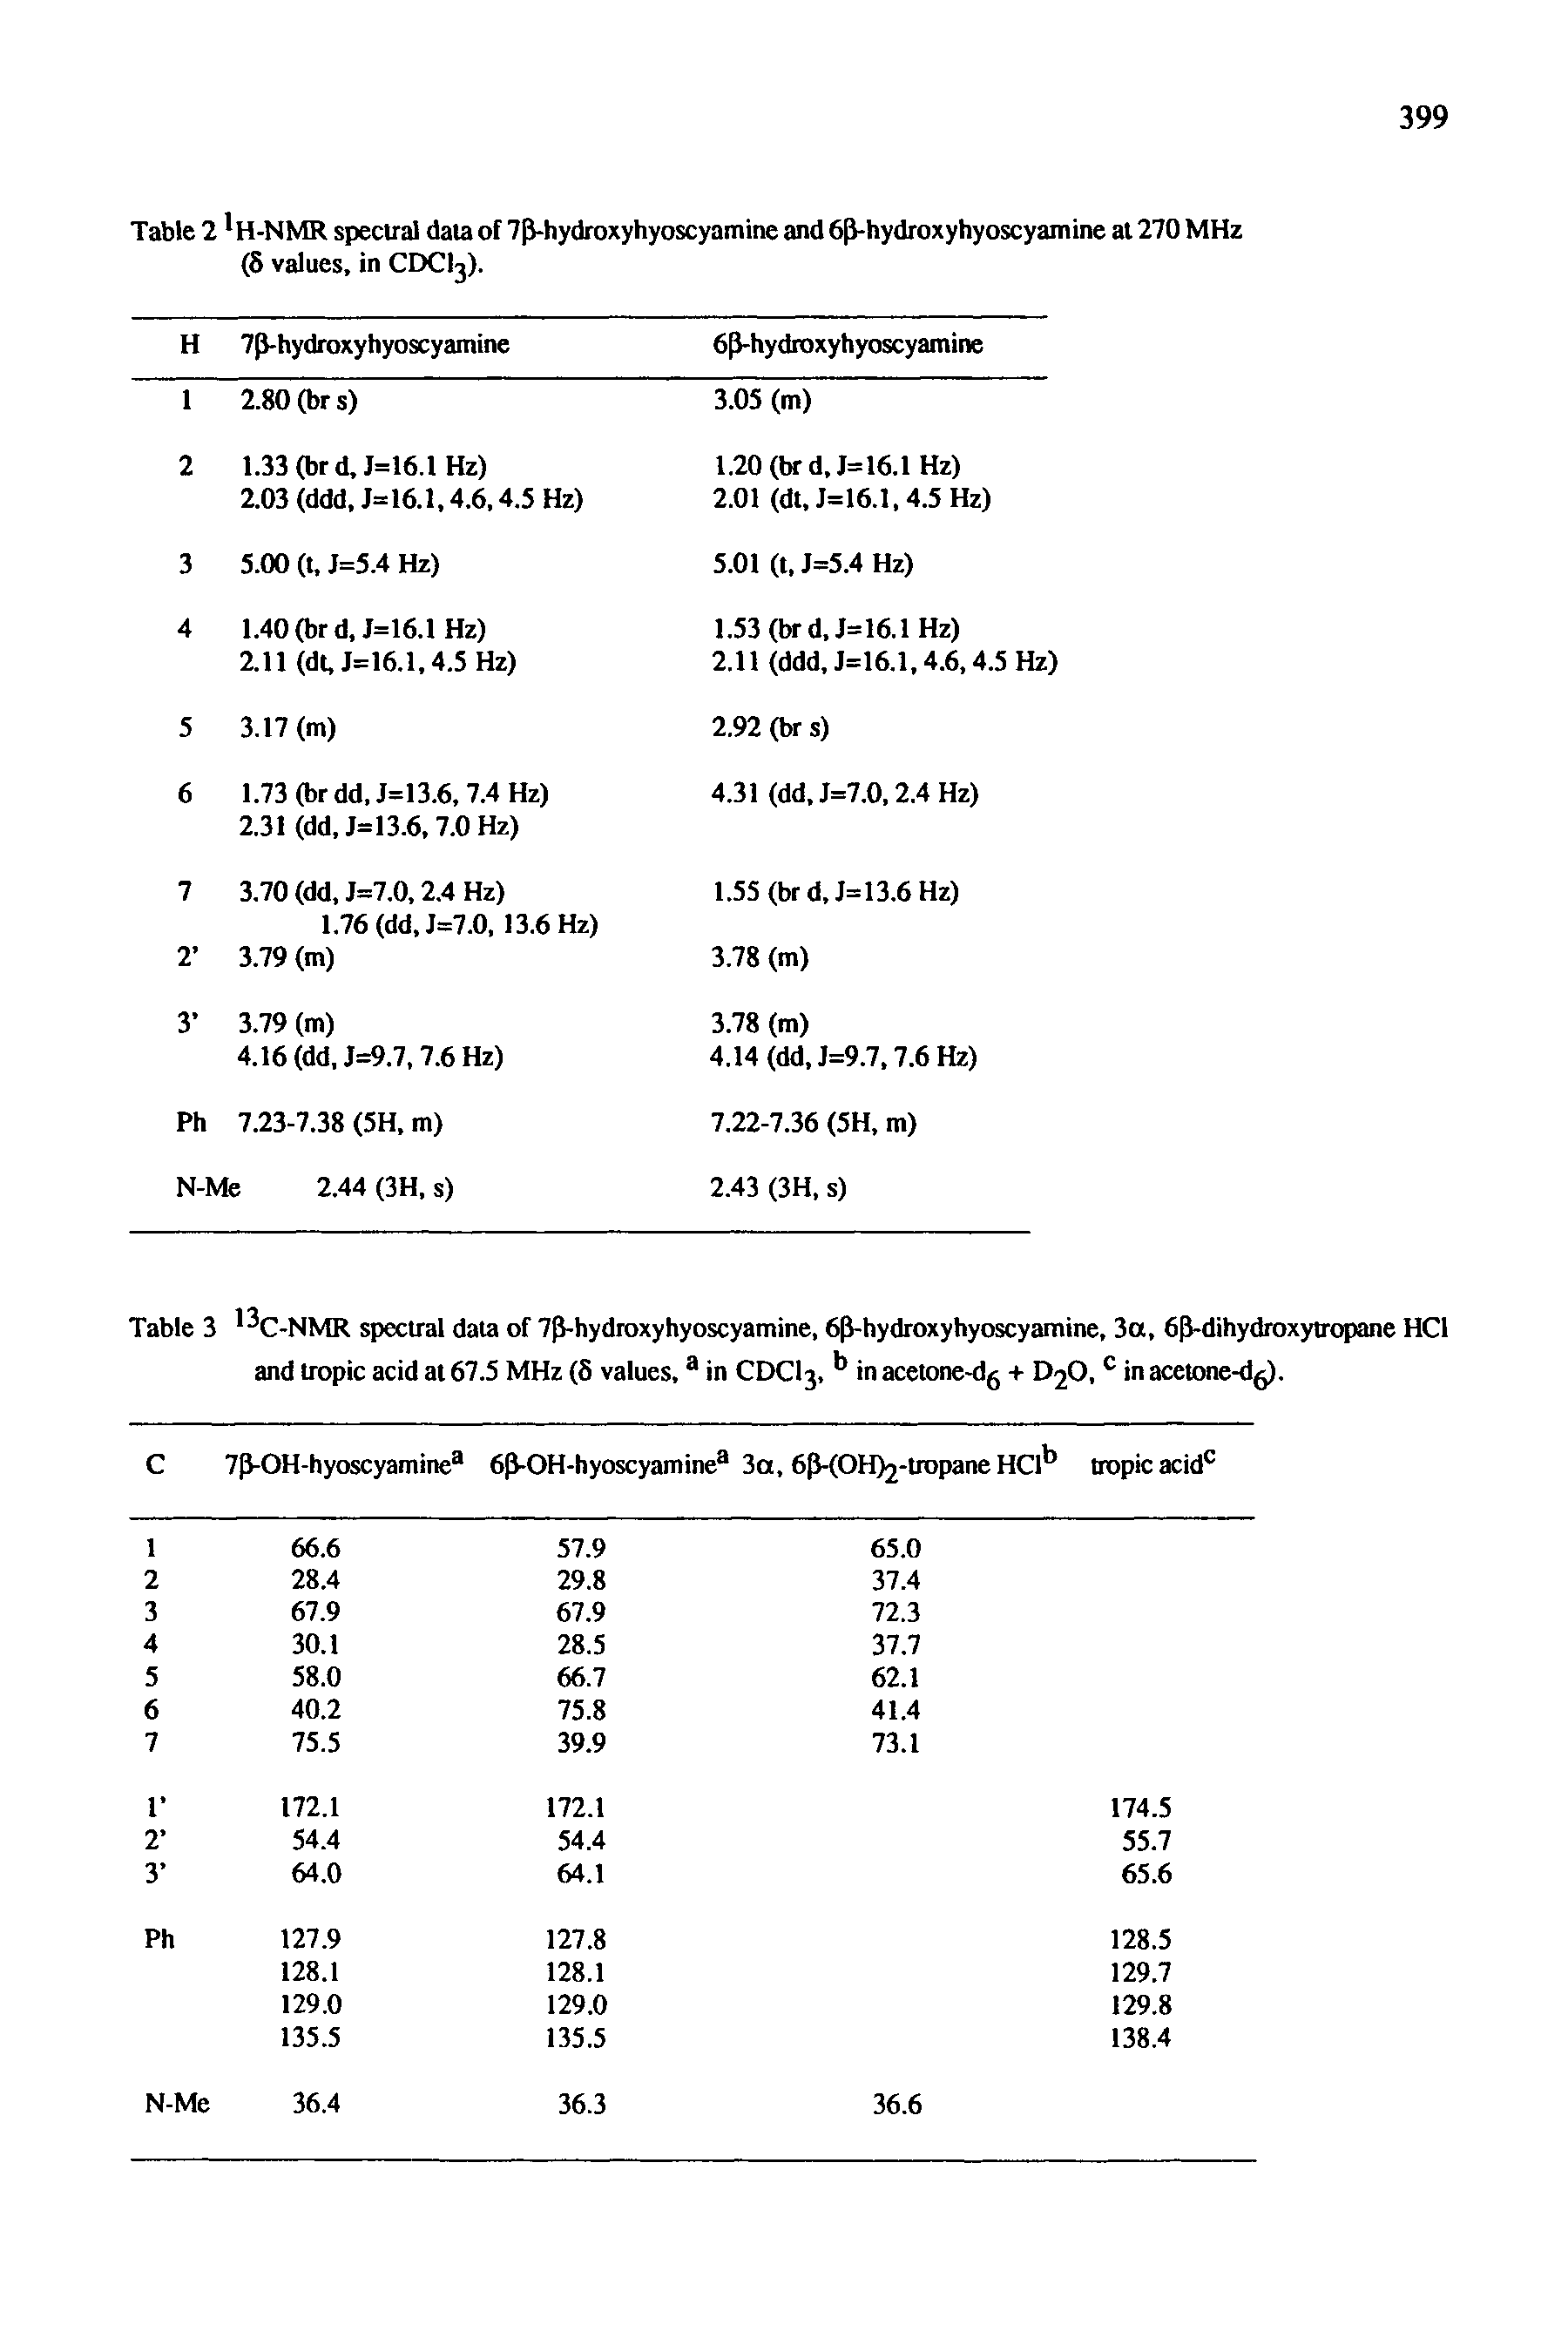 Table 2 H-NMR spectral data of 7P-hydroxyhyoscyamme and 6p-hydroxyhyoscyamine at 270 MHz (5 values, in CDClj).